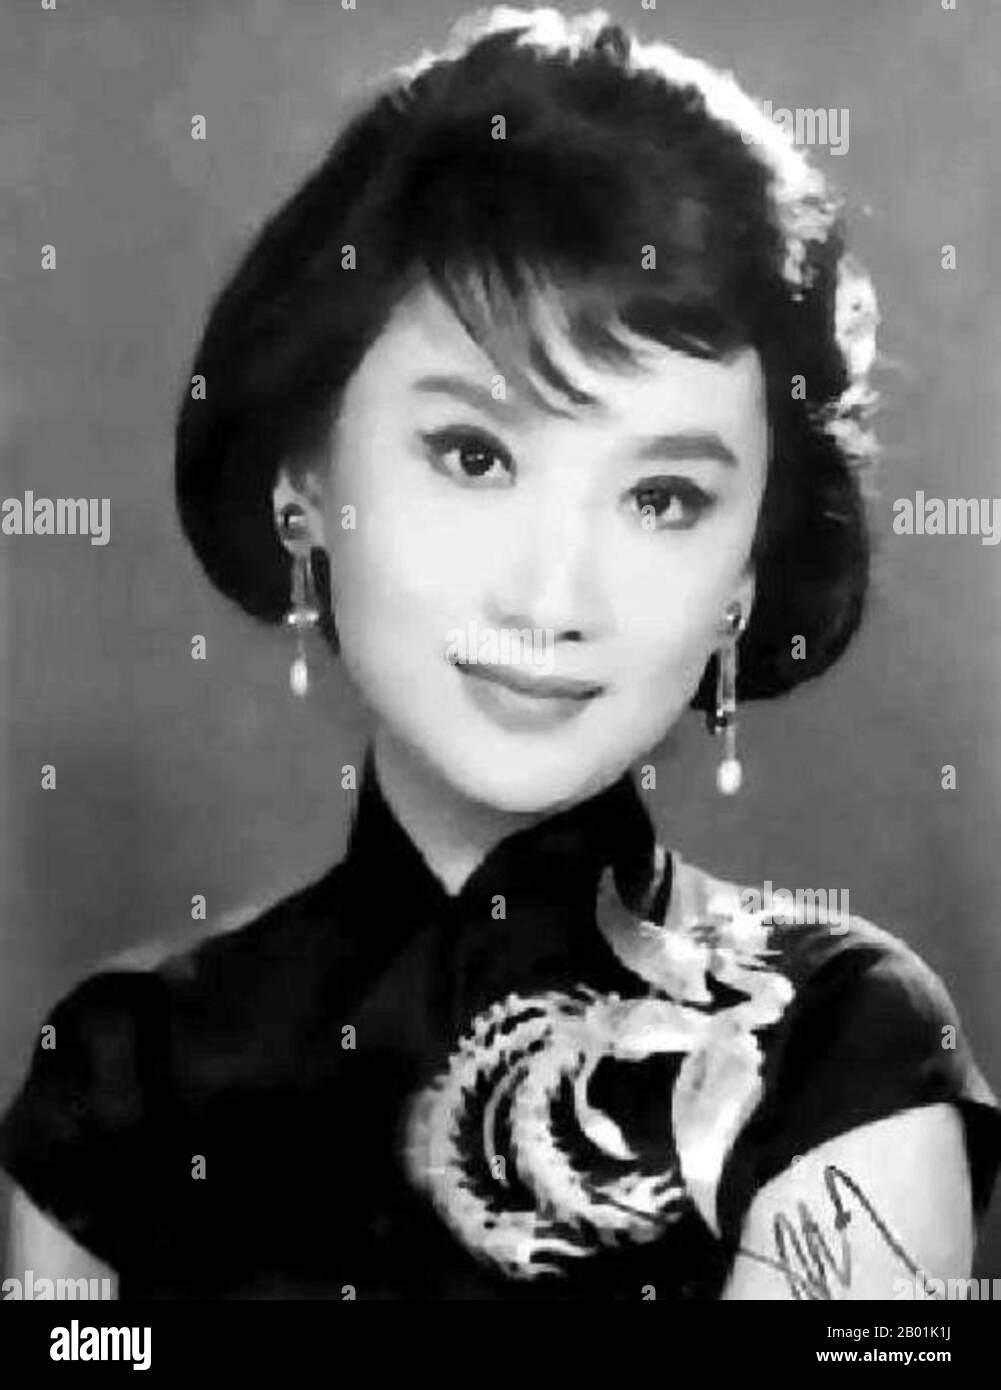 Cina: Xia Meng (16 febbraio 1933 - 30 ottobre 2016), attrice e produttrice cinematografica di Hong Kong, c. 1950s. Xia Meng (nota anche come HSIA Moon o Miranda Yang; nata Yang Meng) è un'attrice e produttrice cinematografica di Hong Kong. È stata la figura chiave della scena cinematografica Left Wing Mandarin di Hong Kong. Foto Stock